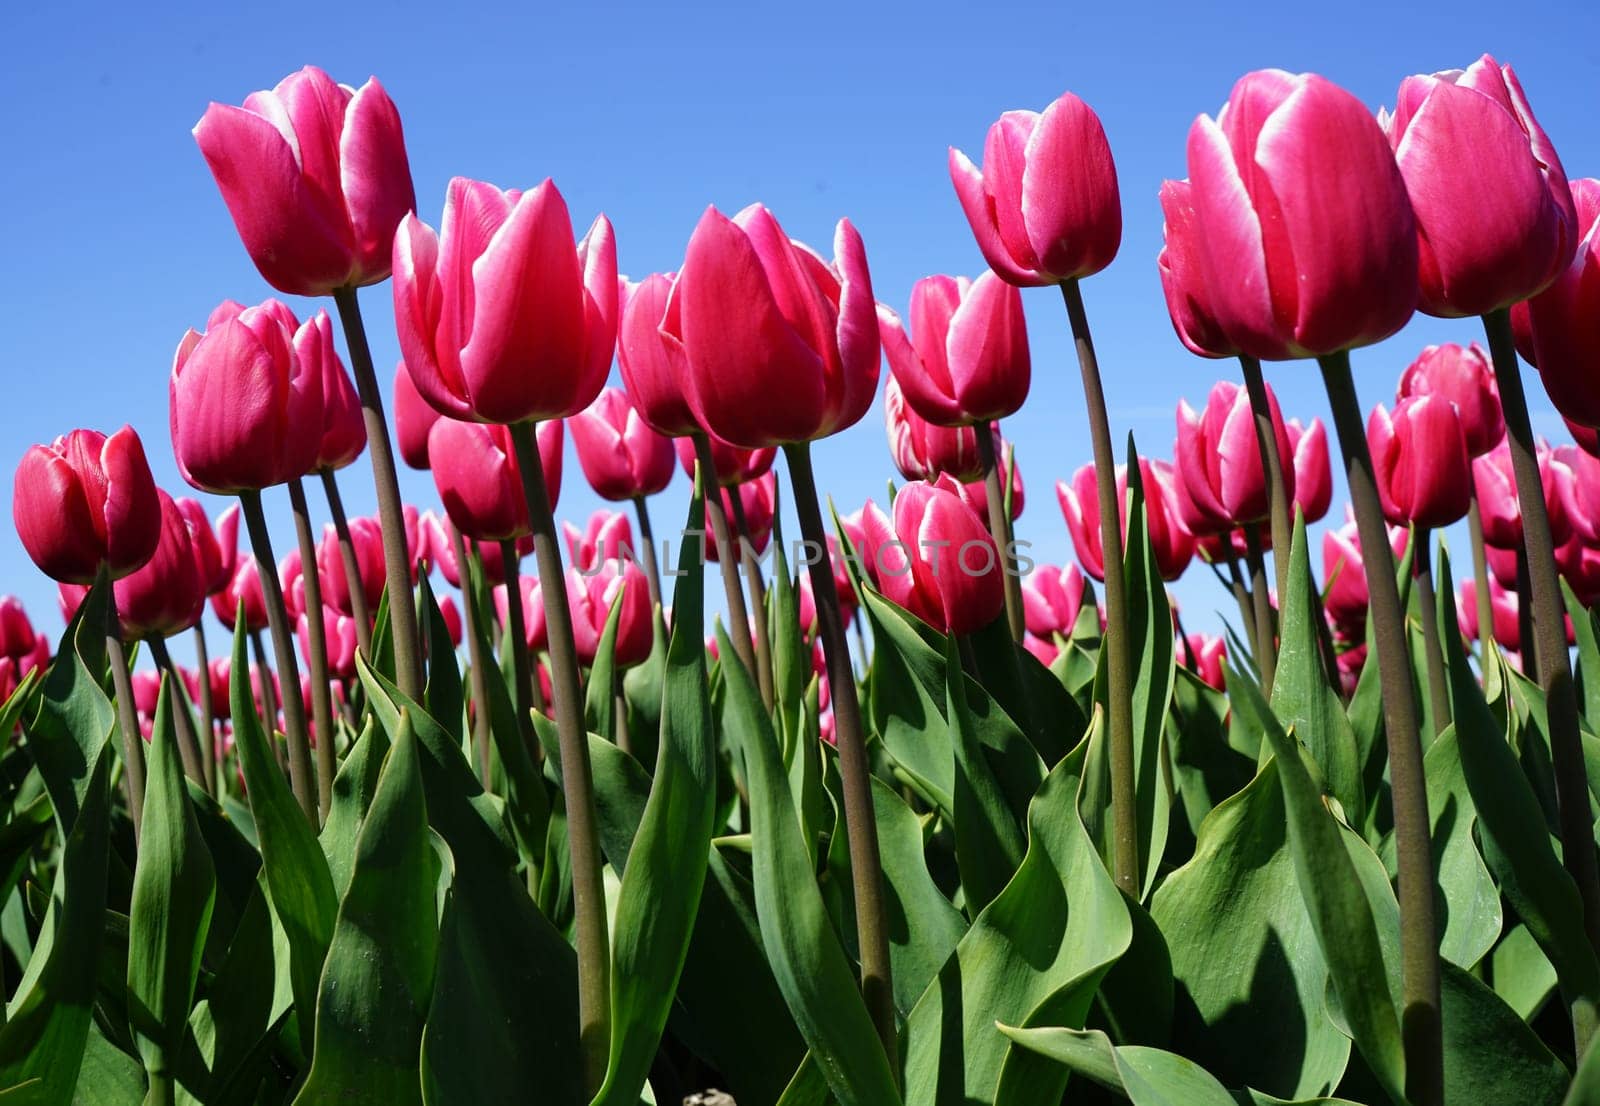 Pink Tulip Field in the Netherlands by WielandTeixeira